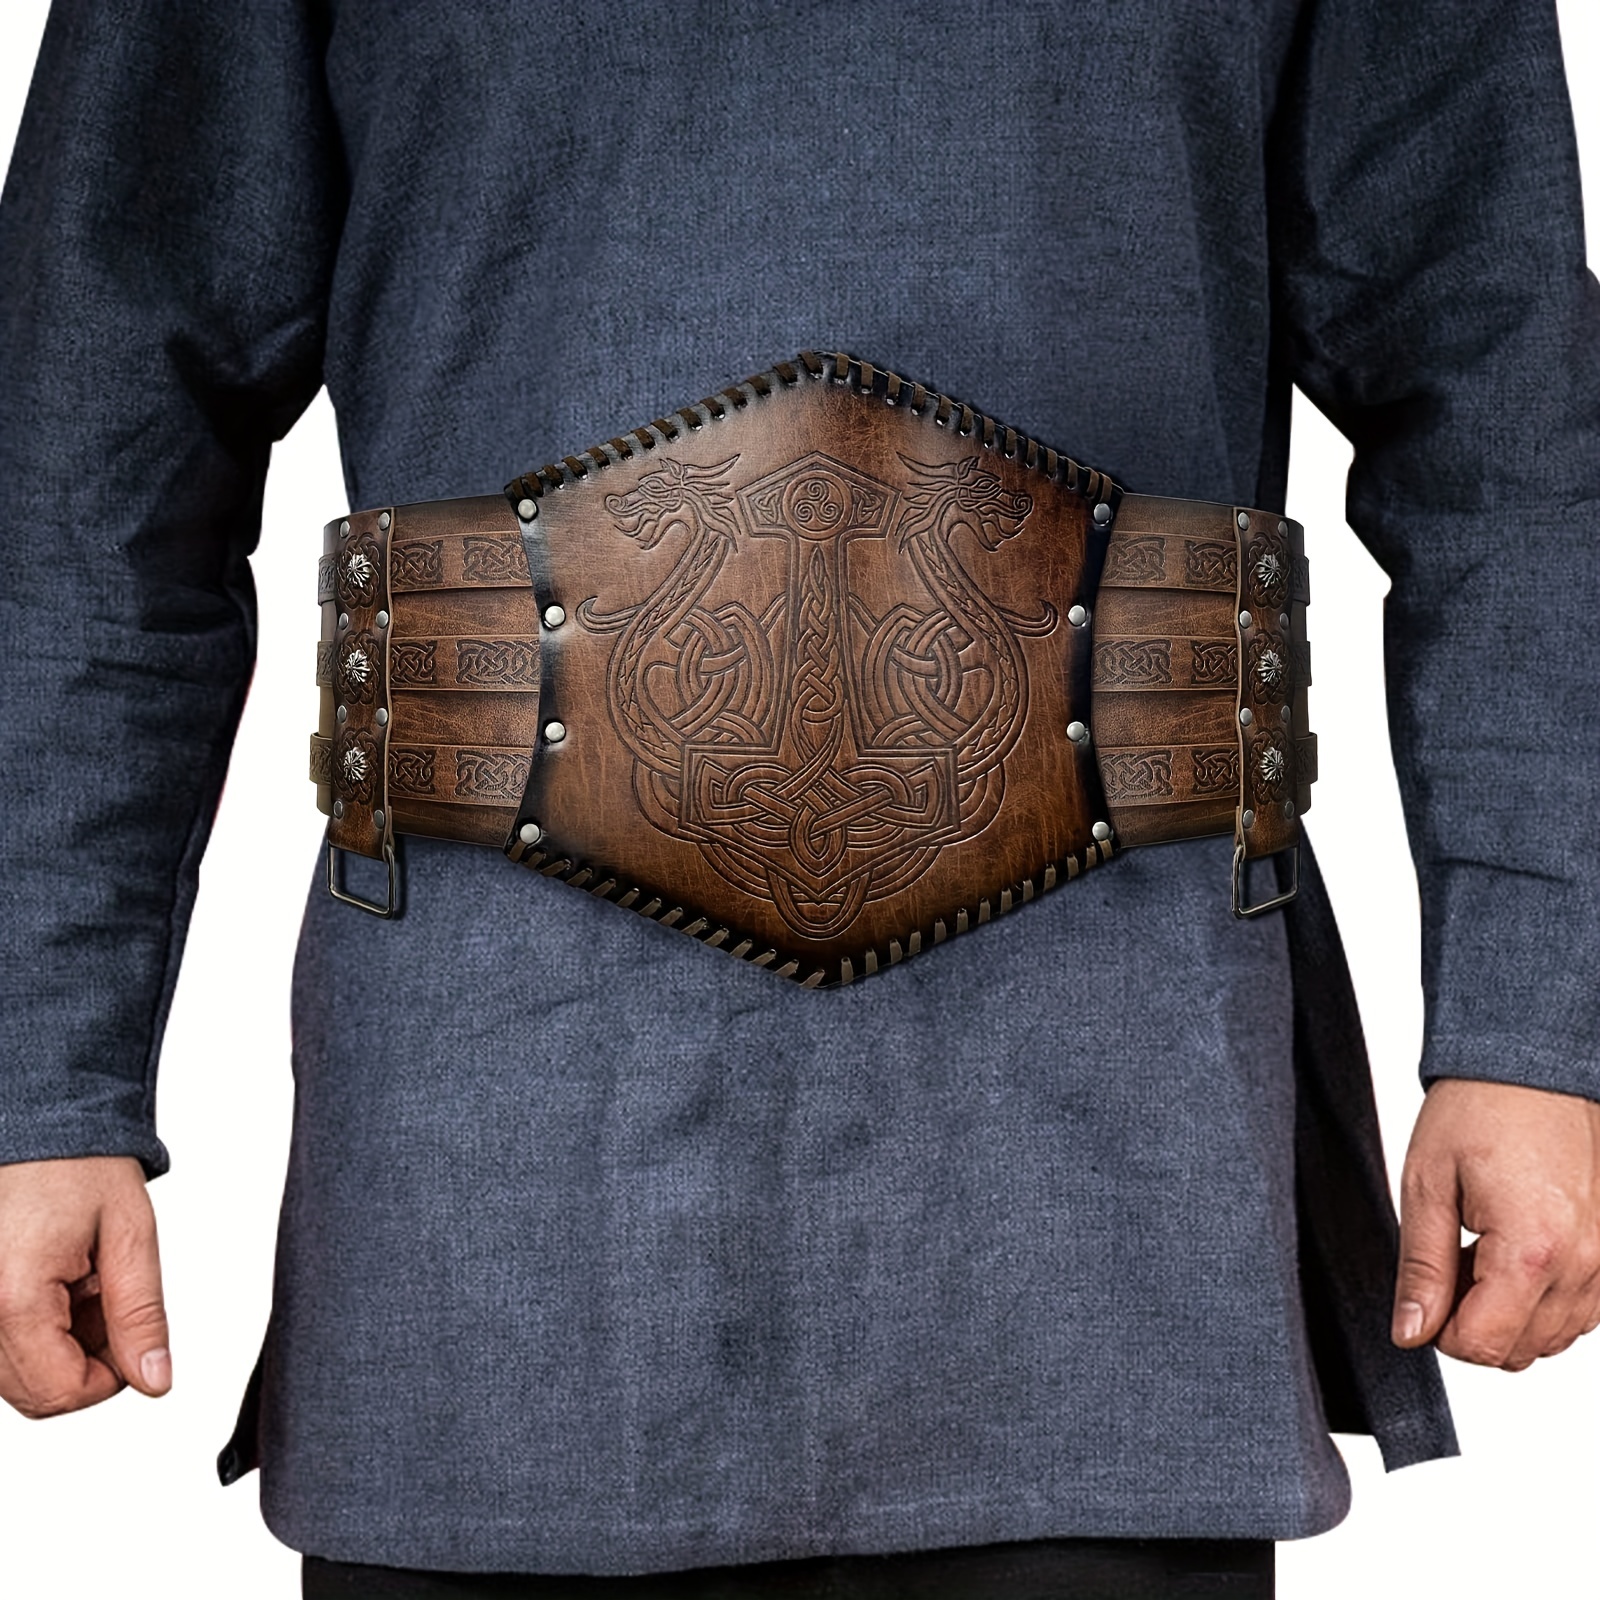 Wide Medieval Waist Belt - Black